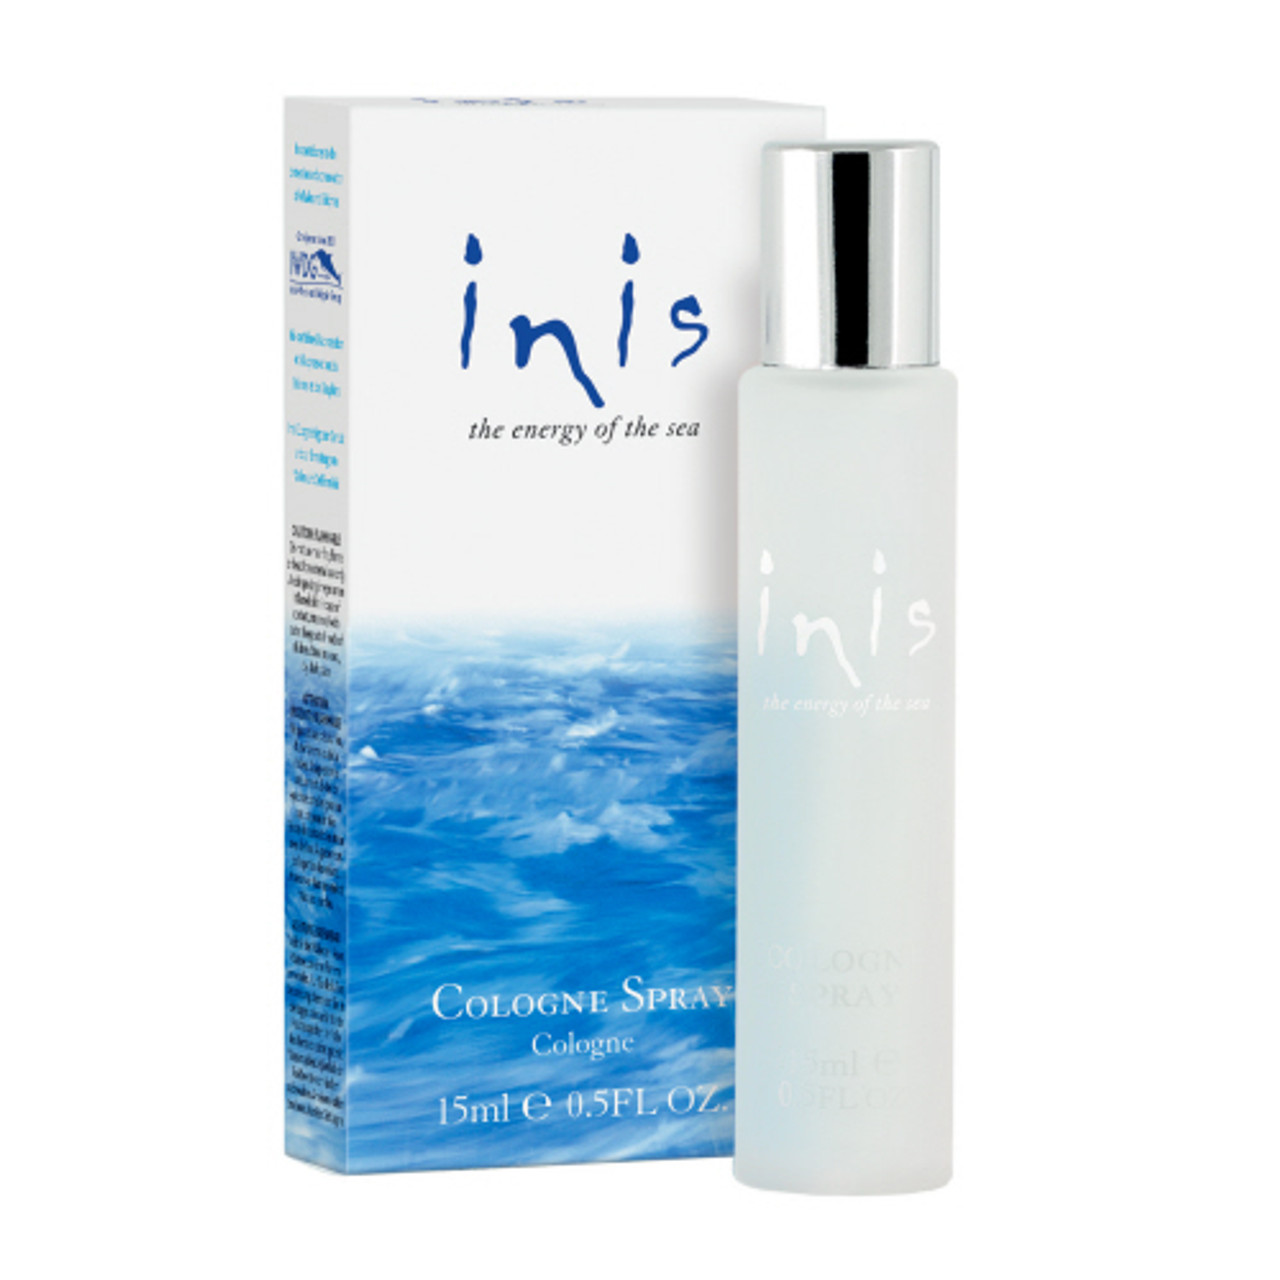 inis spray product happynest beachology online shop